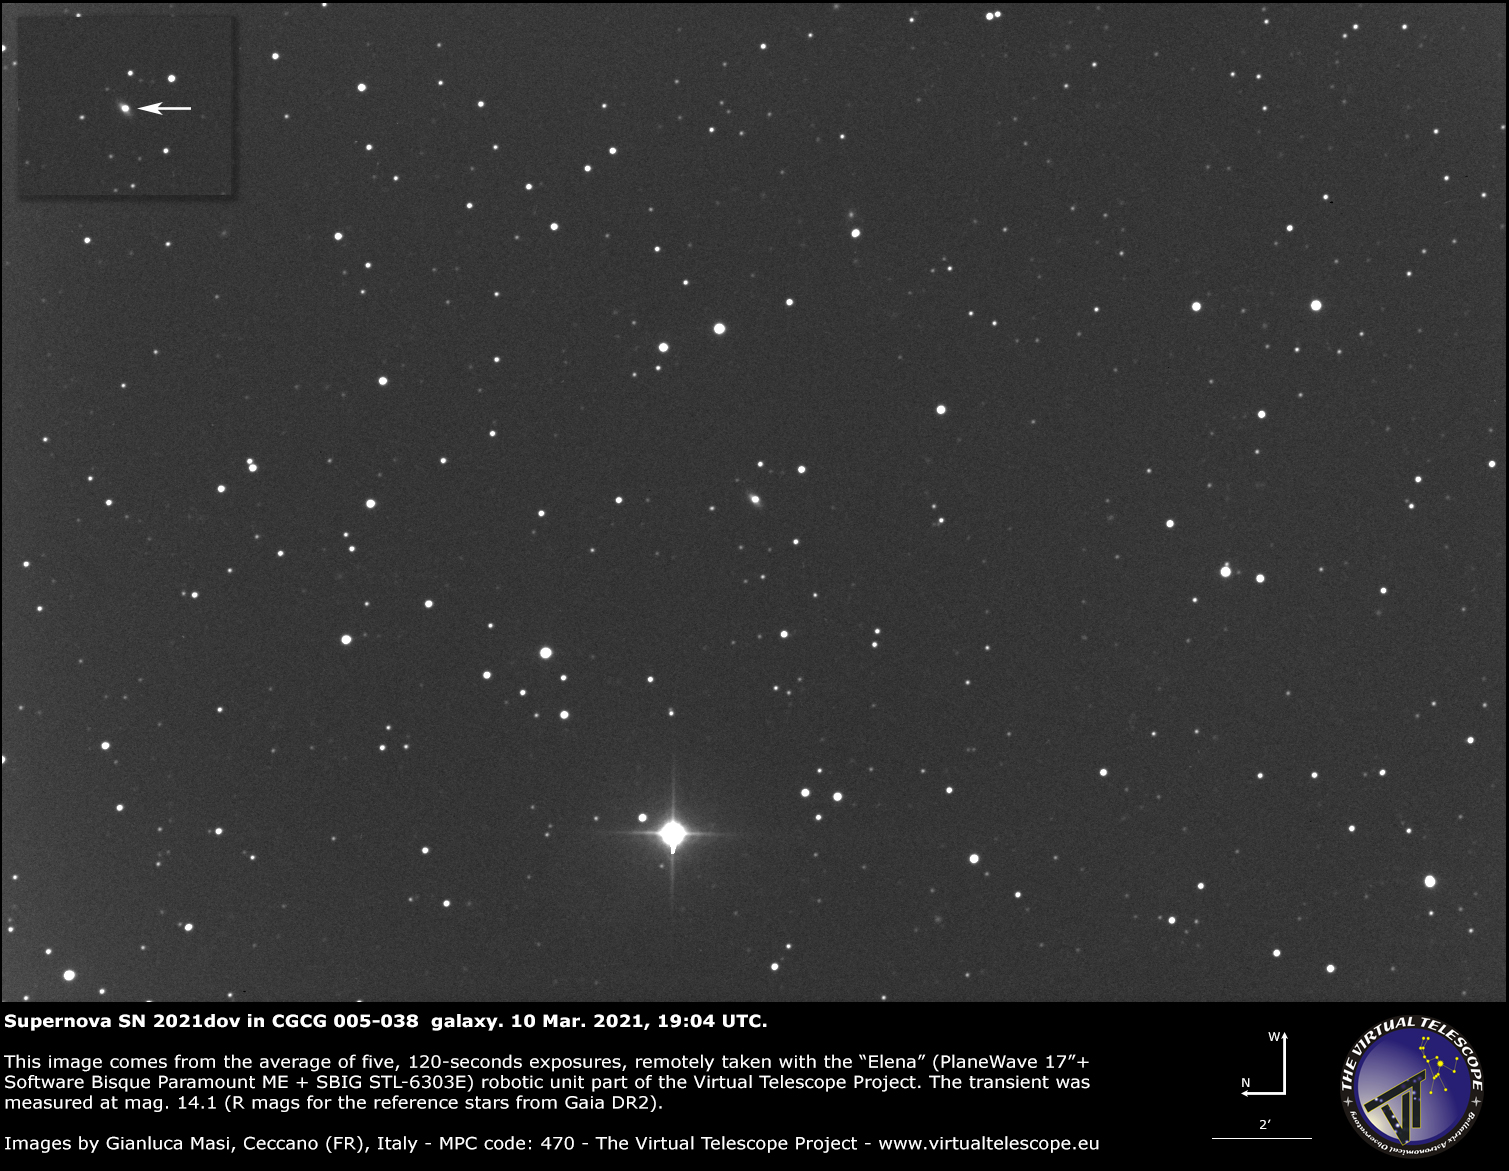 Supernova 2021dov in CGCG 005-038 galaxy: 10 Mar. 2021.